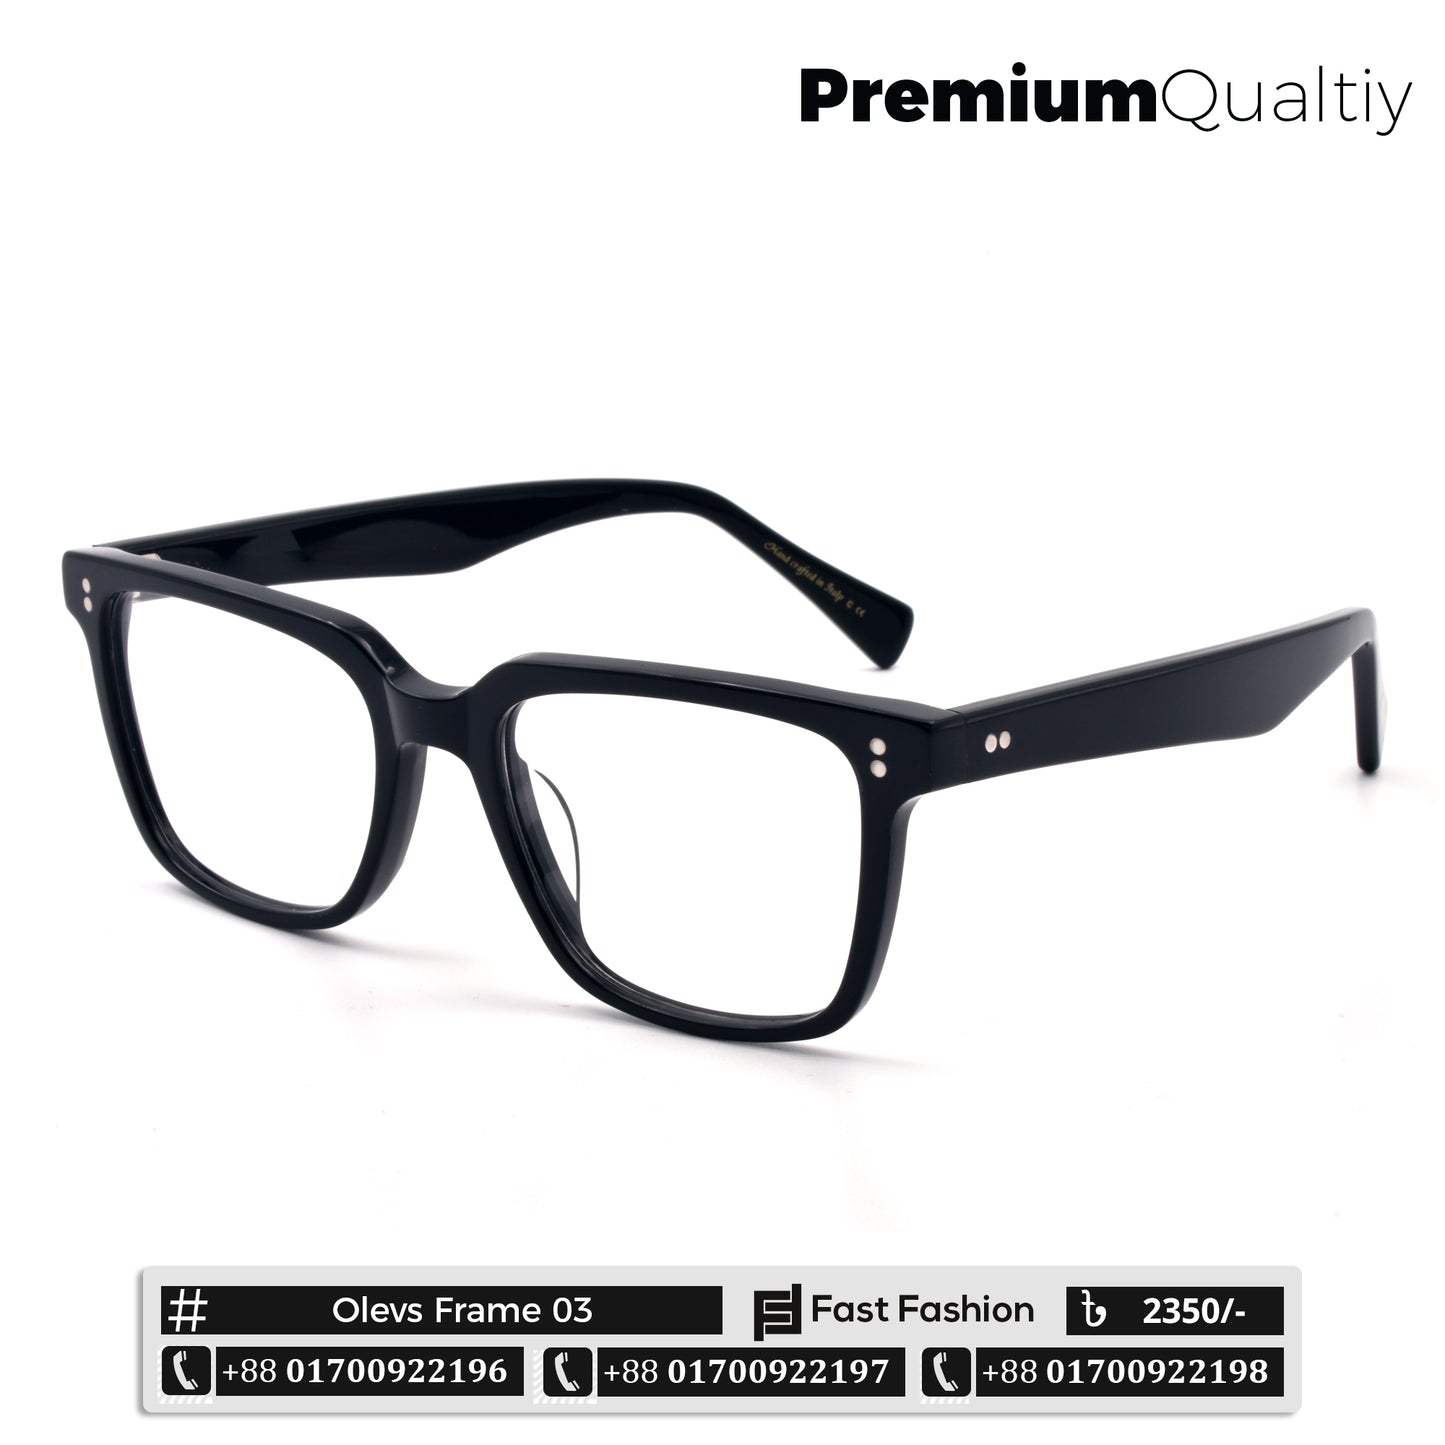 Premium Quality Trendy Stylish Optic Frame | Olevs Frame 03